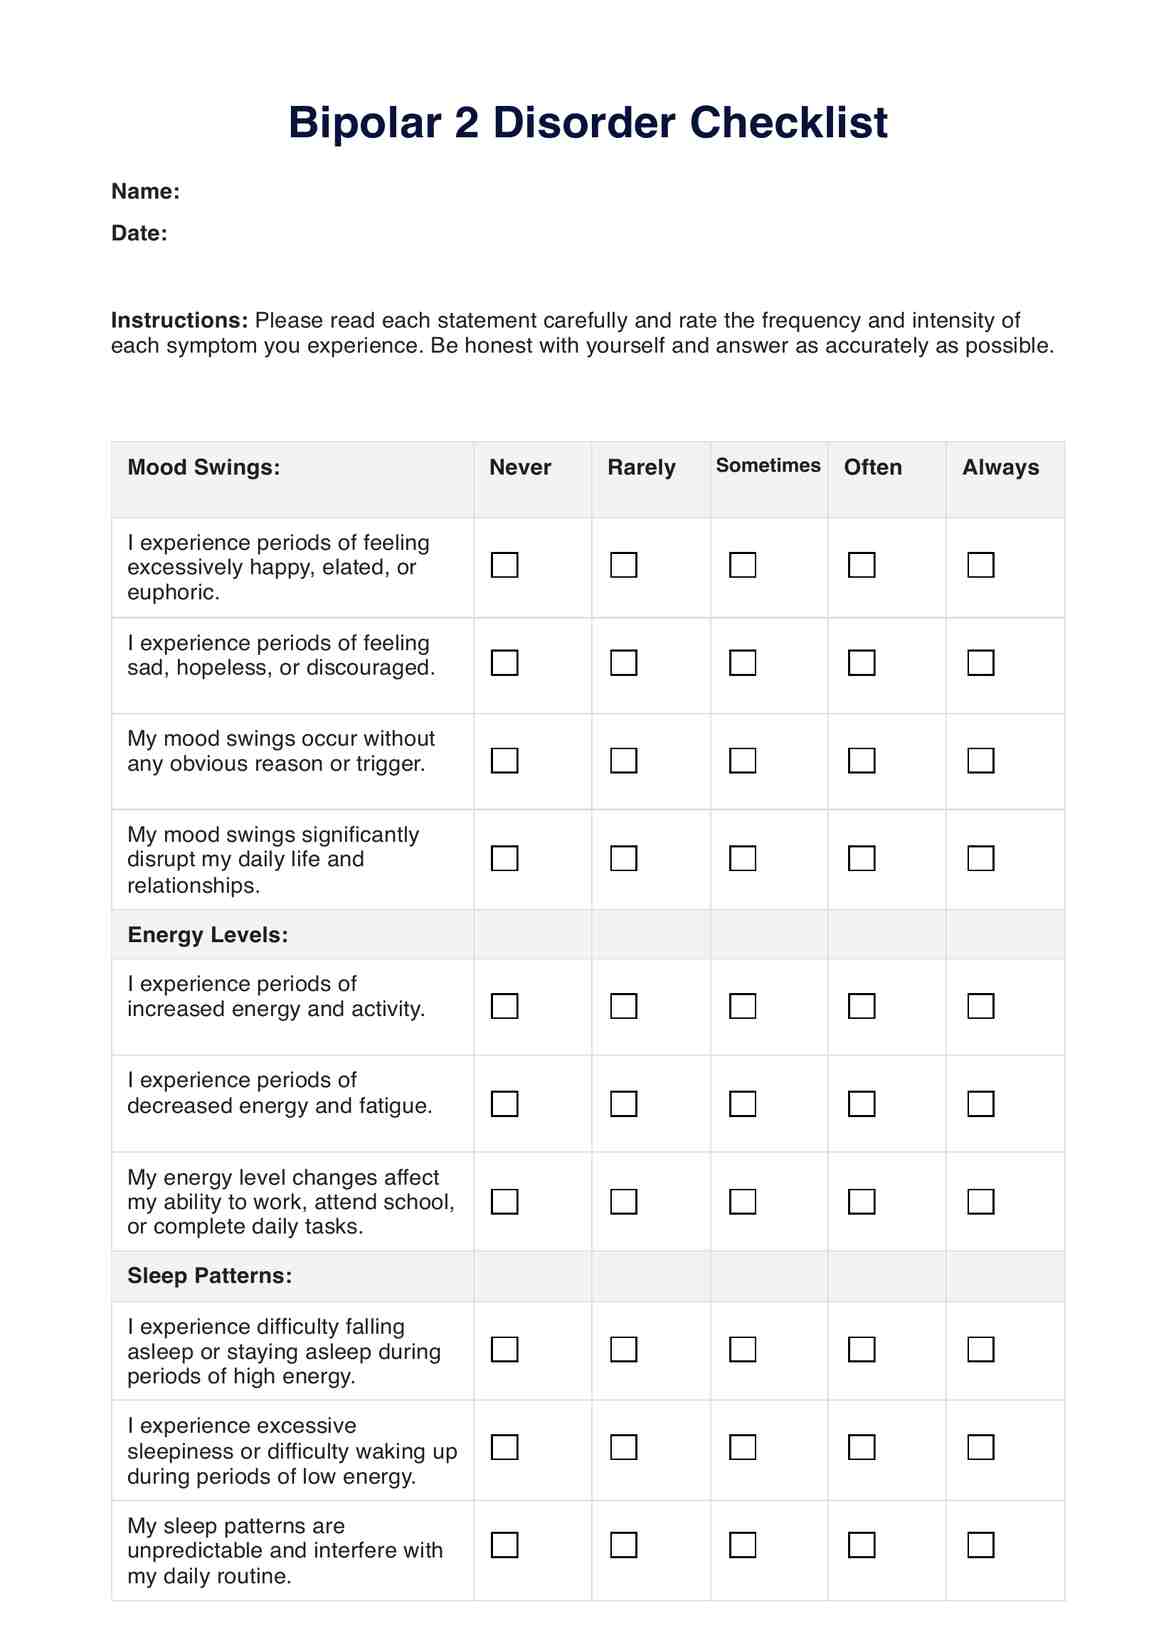 Bipolar 2 Checklist PDF Example